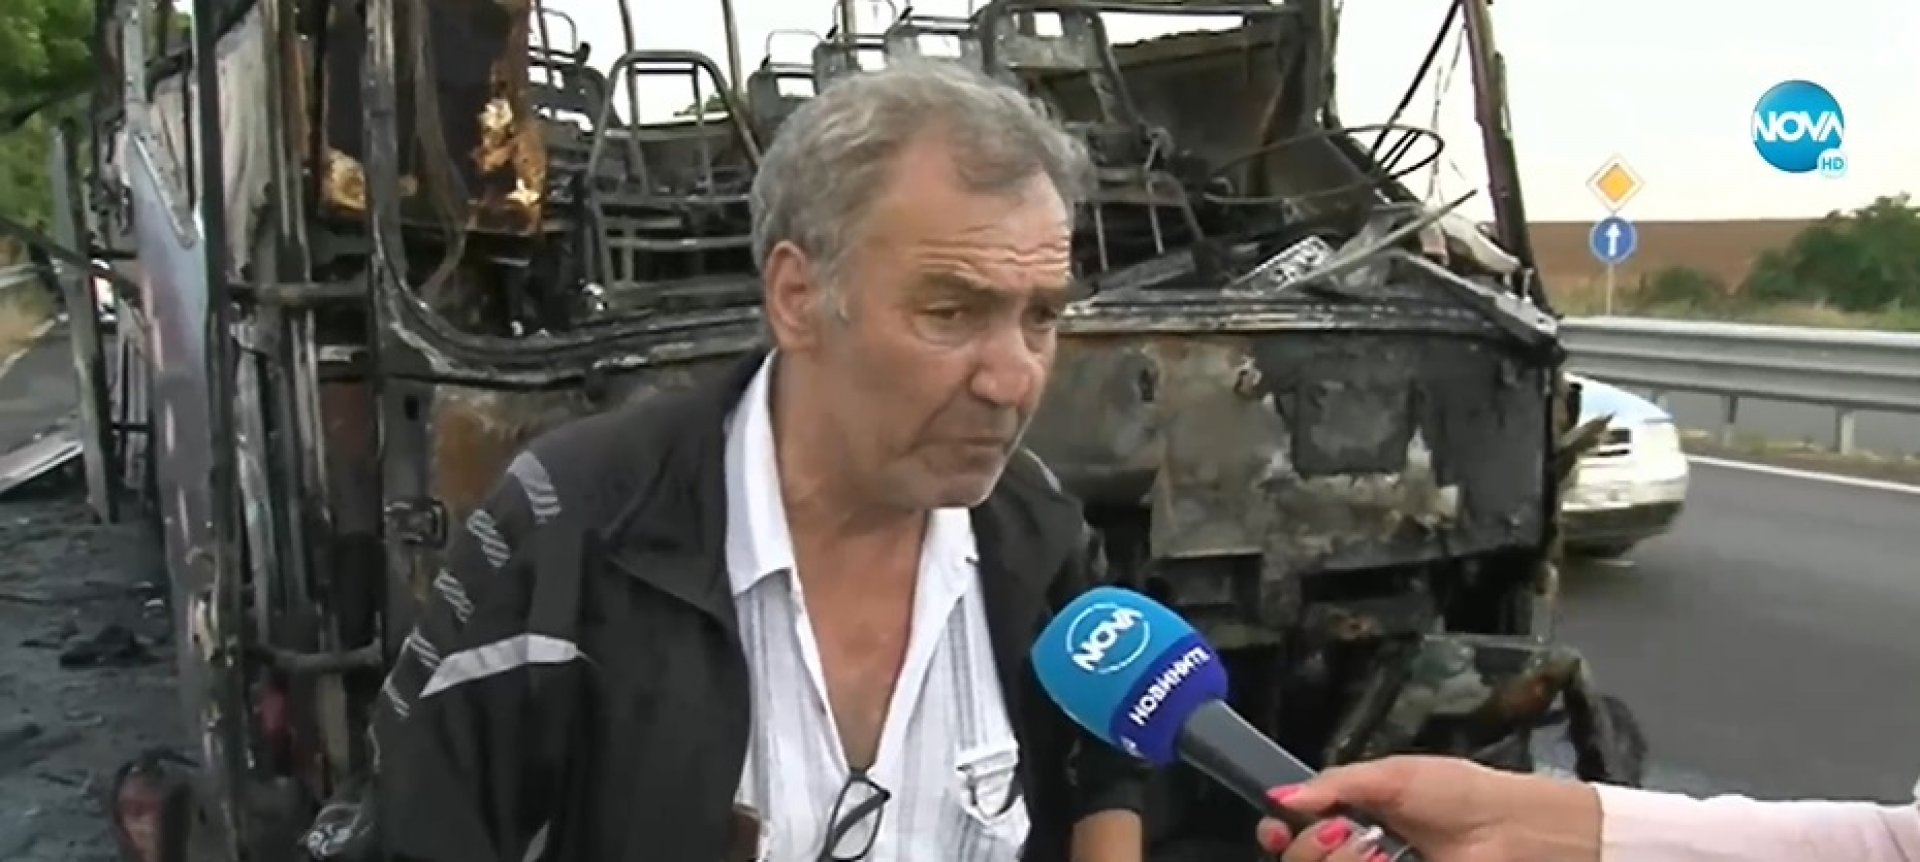 Водачът на изгорелия автобус: Усетих дим и веднага отбих и изведох пътниците - E-Burgas.com